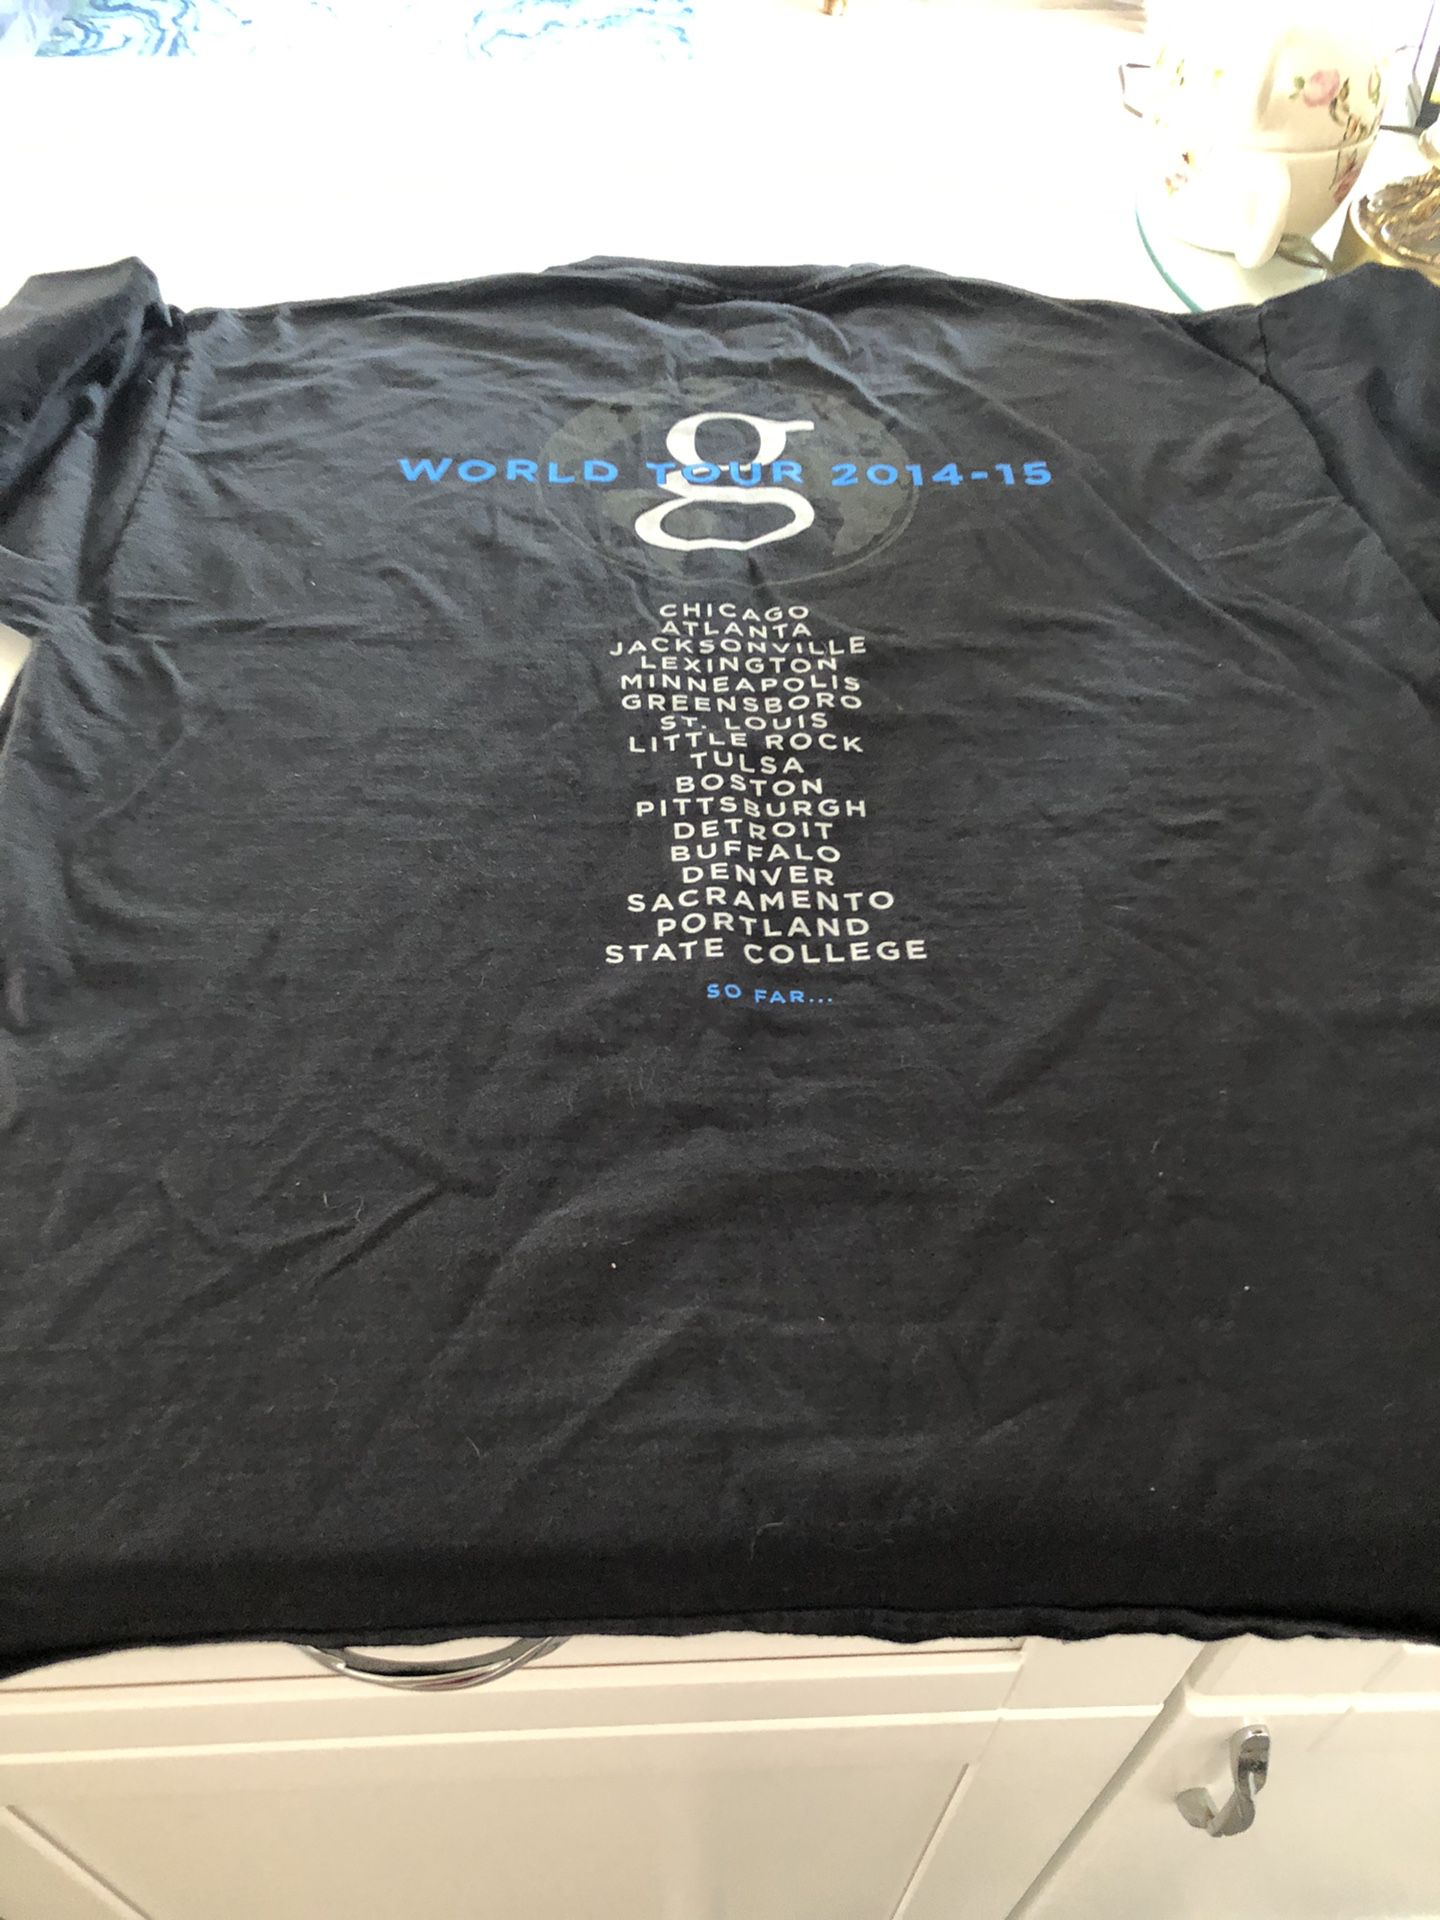 Garth brooks world tour T-shirt 2014 and 15. Size 2X